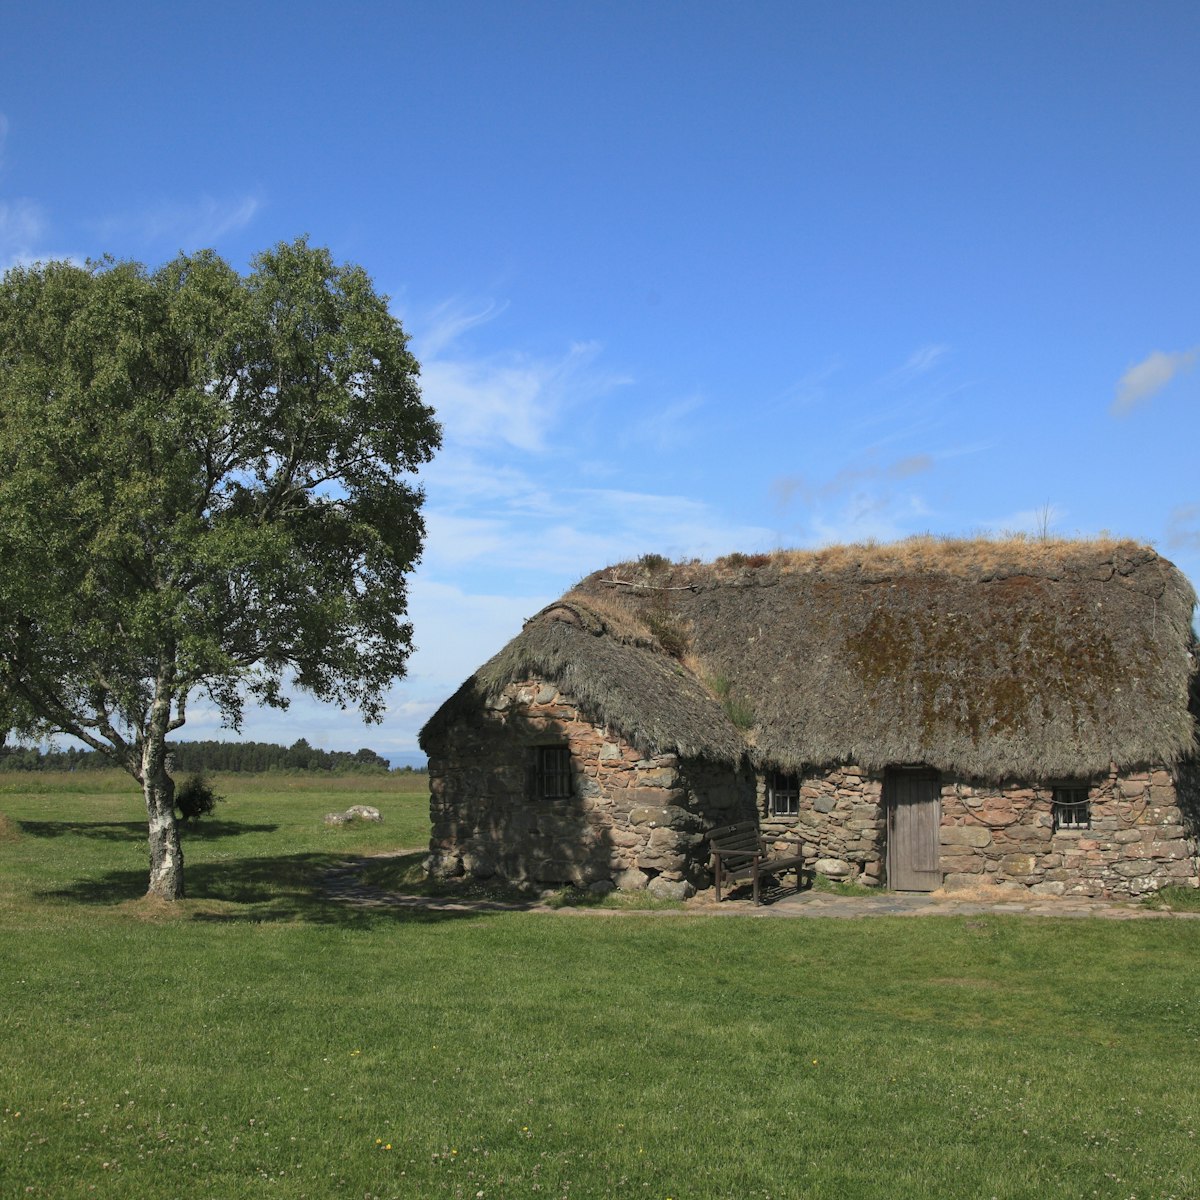 Old House (present during battle), Culloden, Battlefield, near Inverness, Scotland